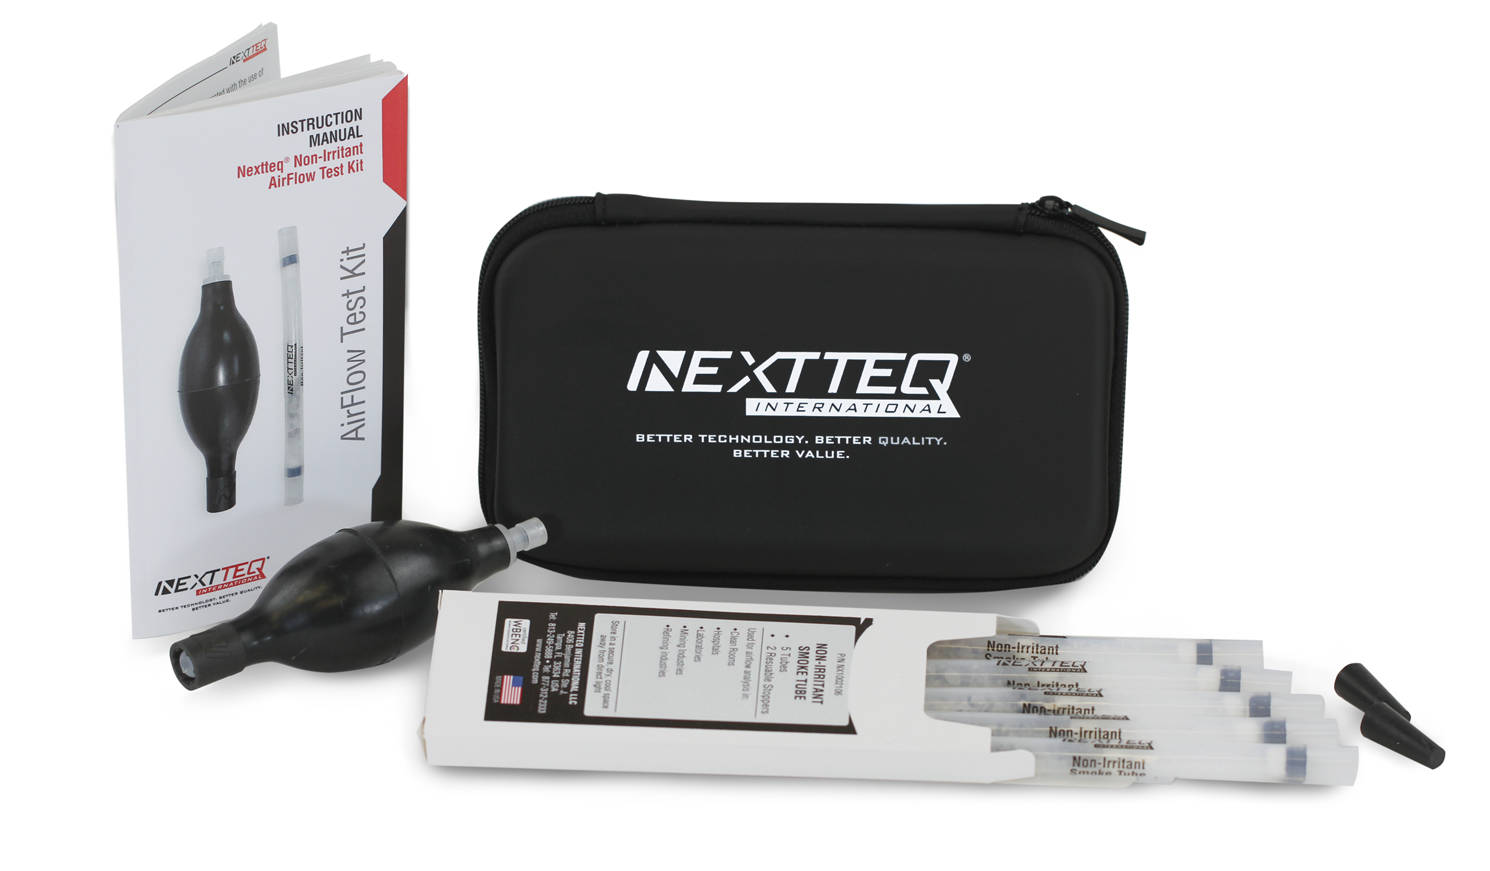 A Nextteq® Non-Irritant AirFlow Test Kit.